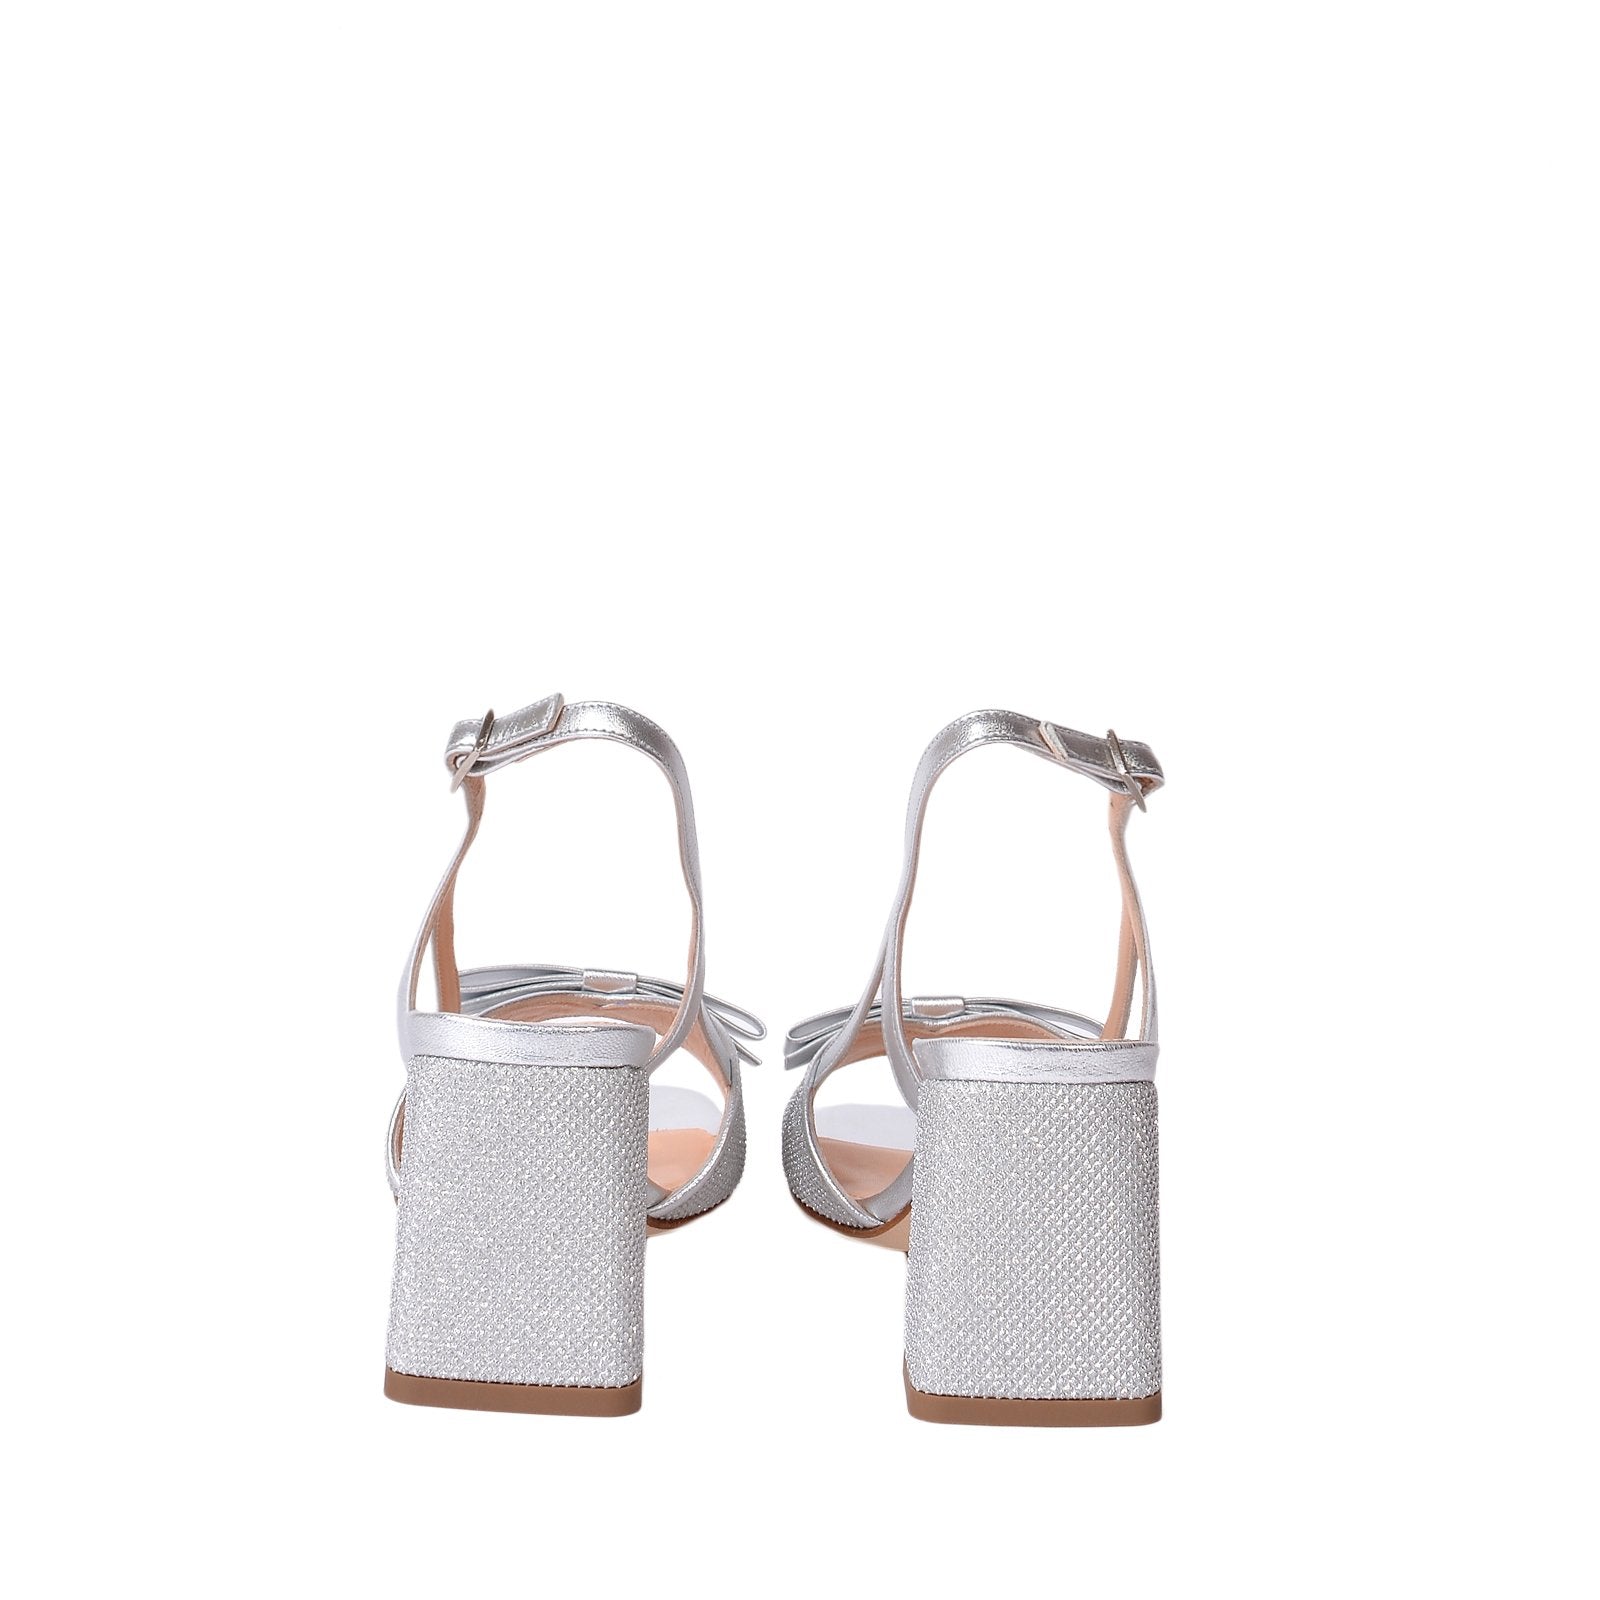 Luxor Bow Glitter Sandals Heels 1103/Silver - 8